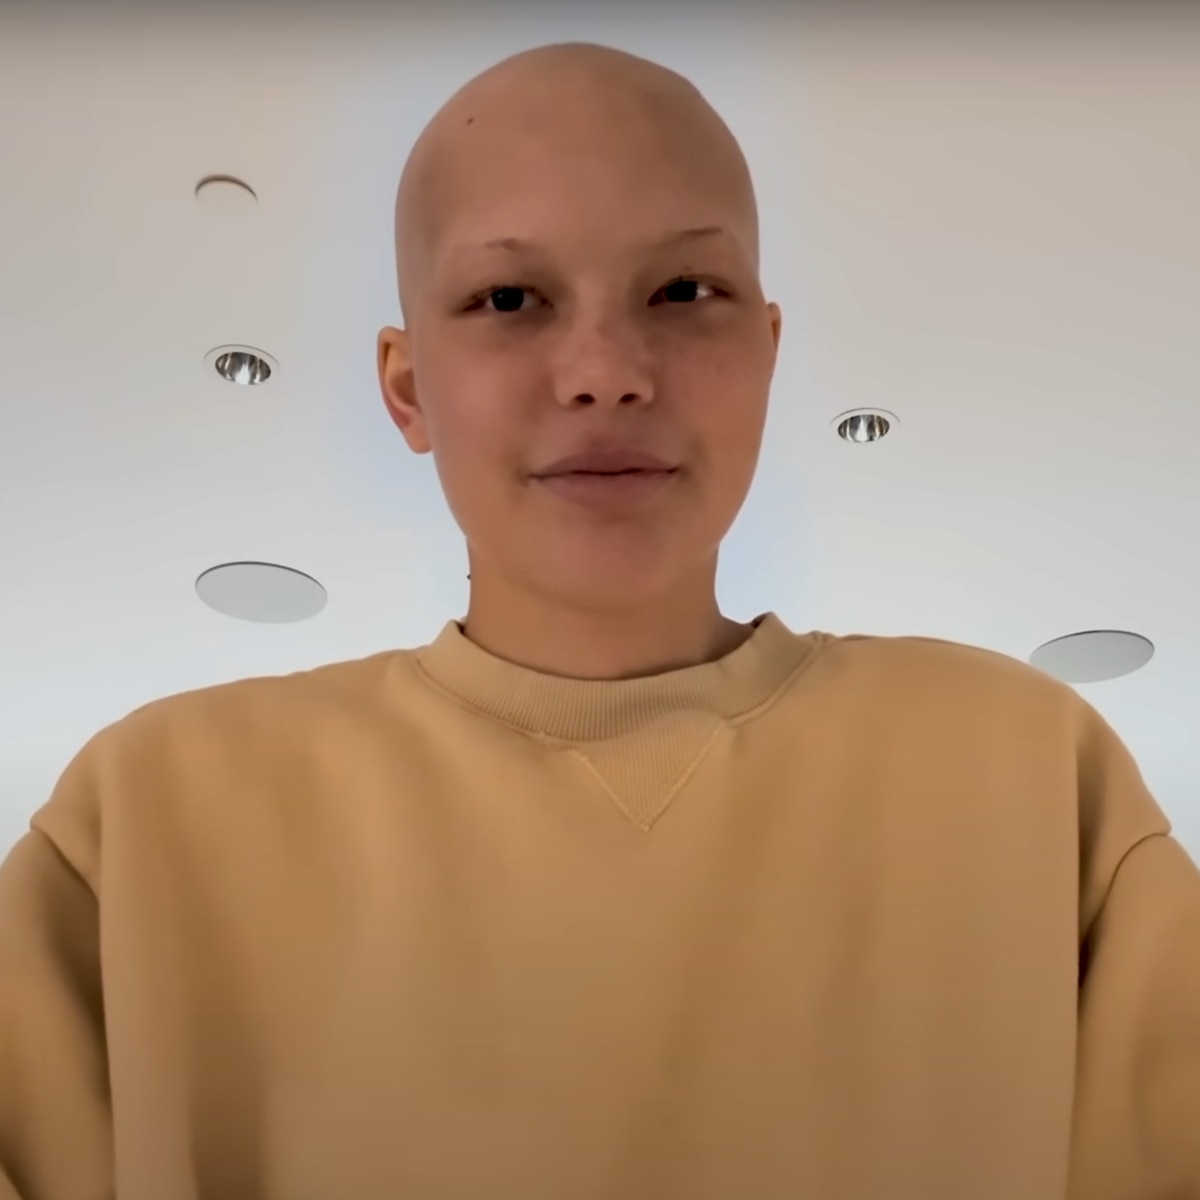 Isabella Strahan Details Memory Loss Amid Cancer Treatment [Video]